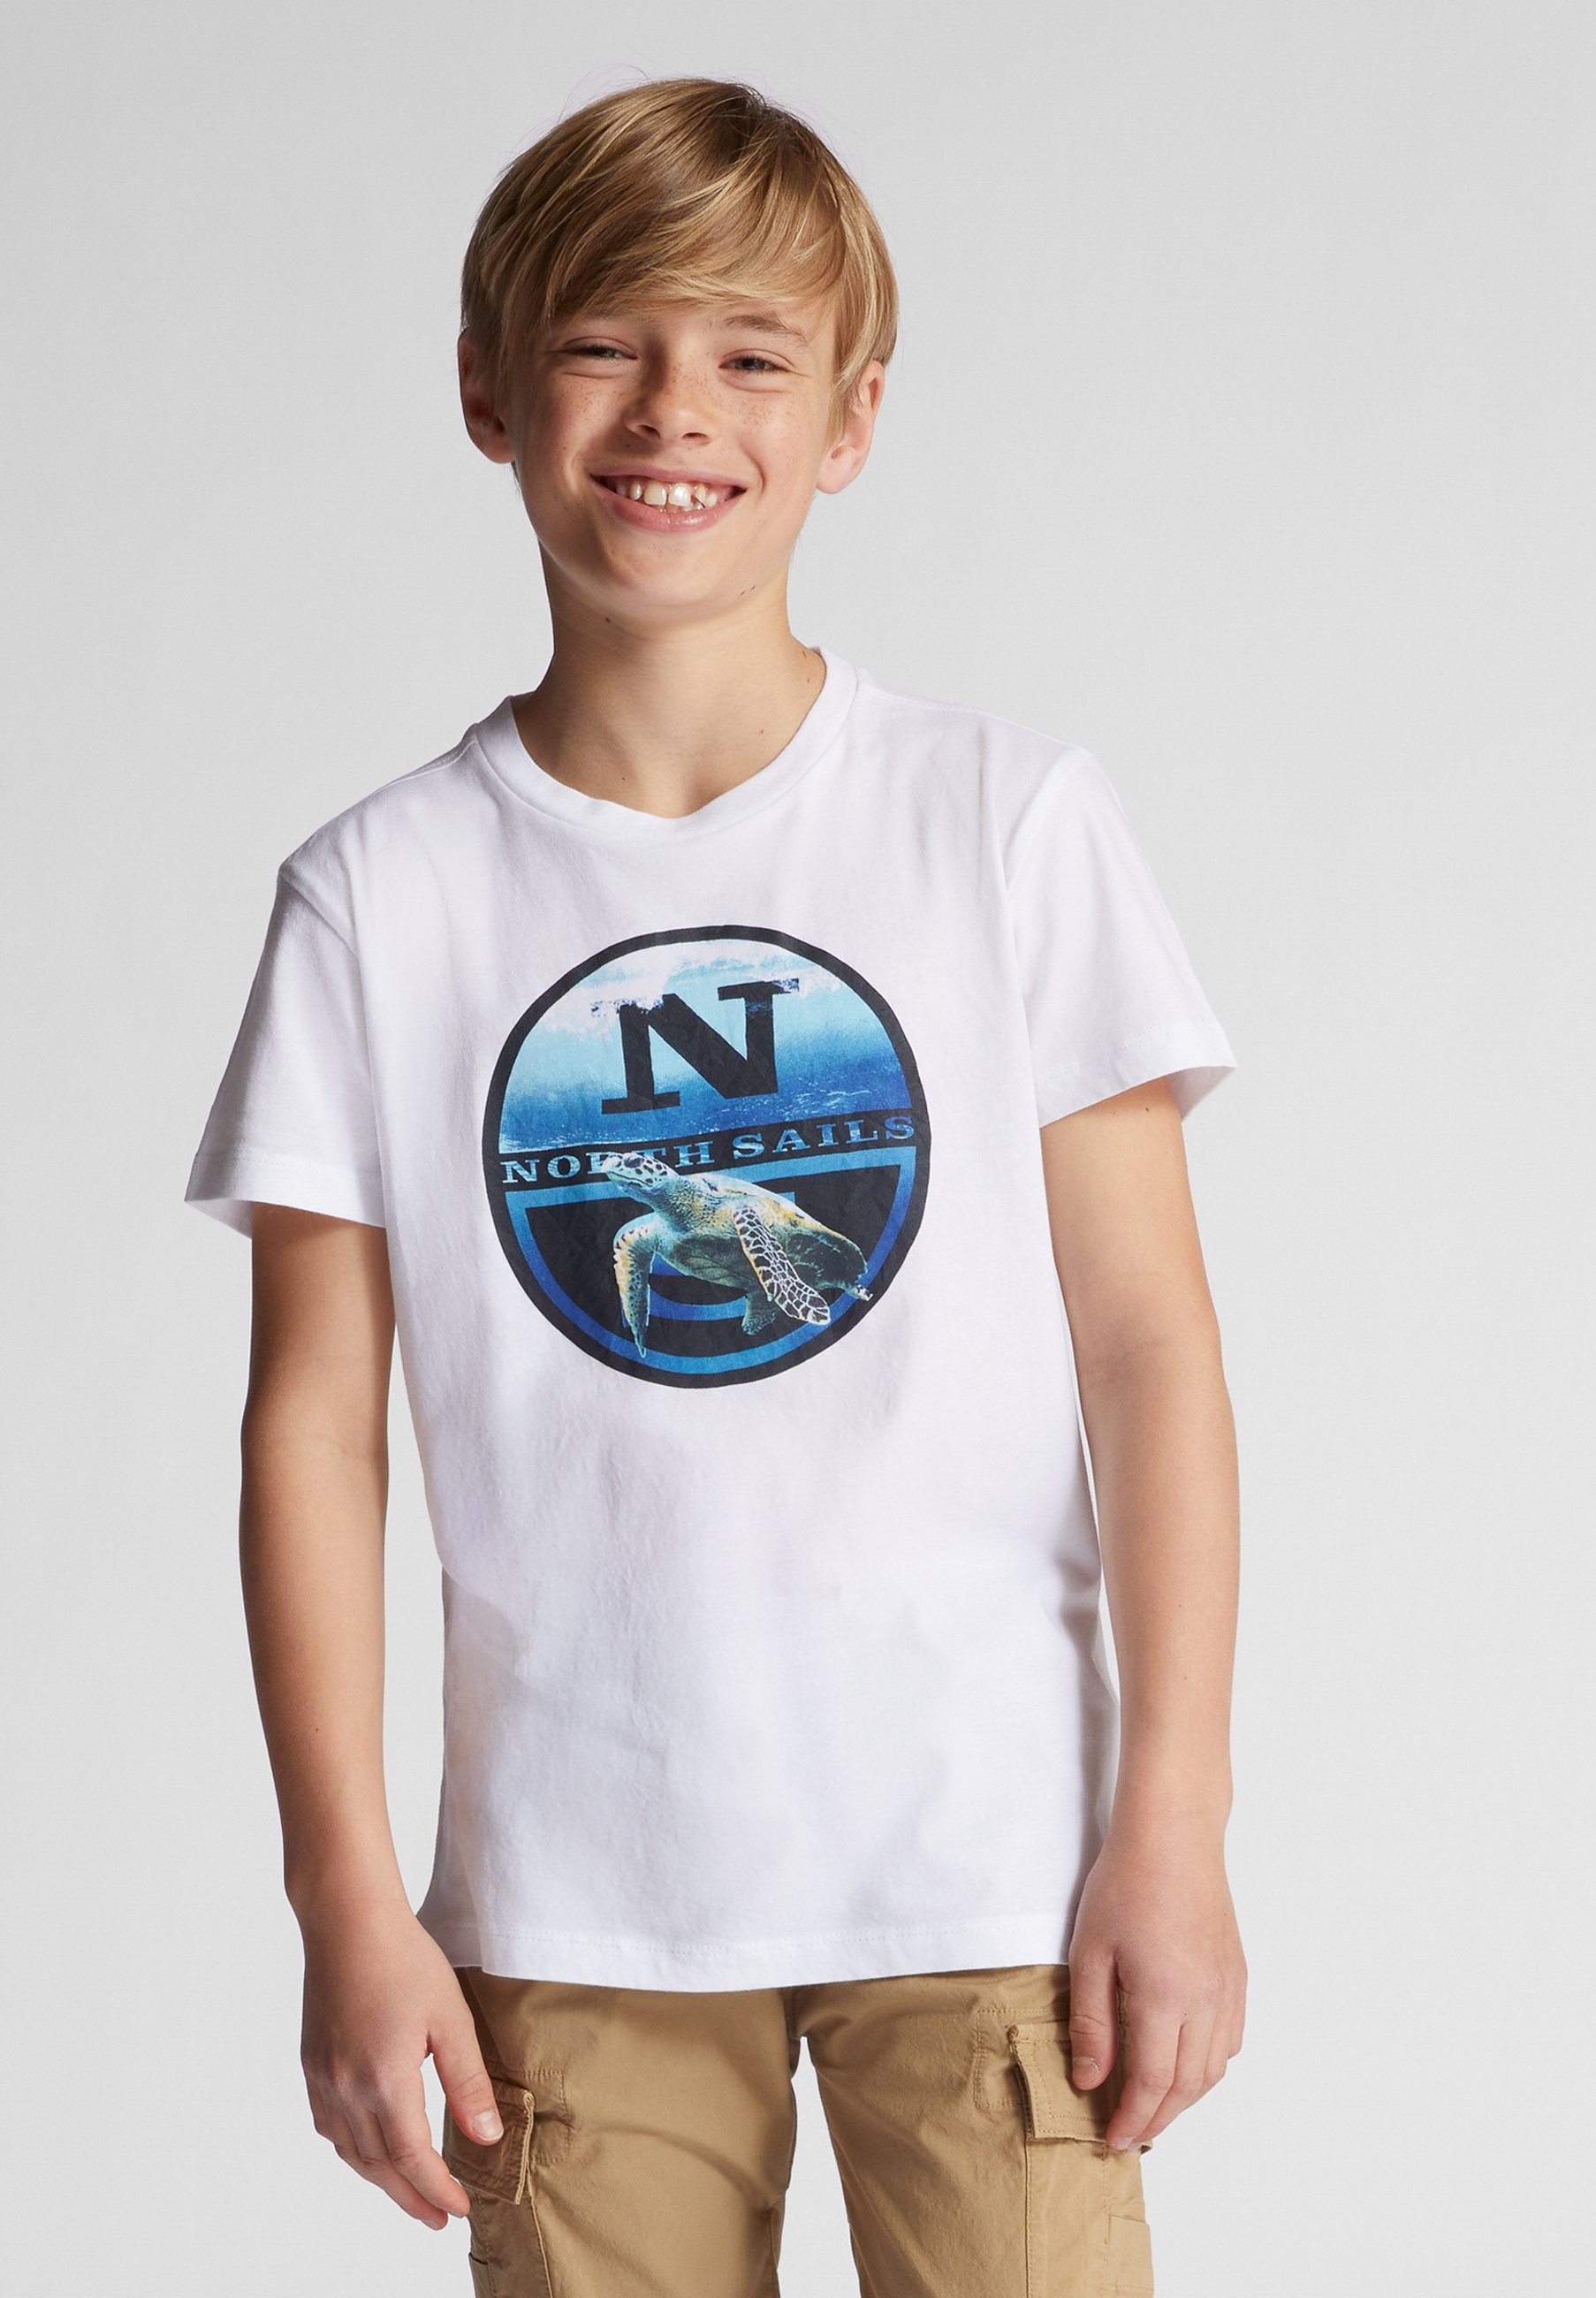 North T-Shirt Sails weiss Baumwoll-Bambus-T-Shirt